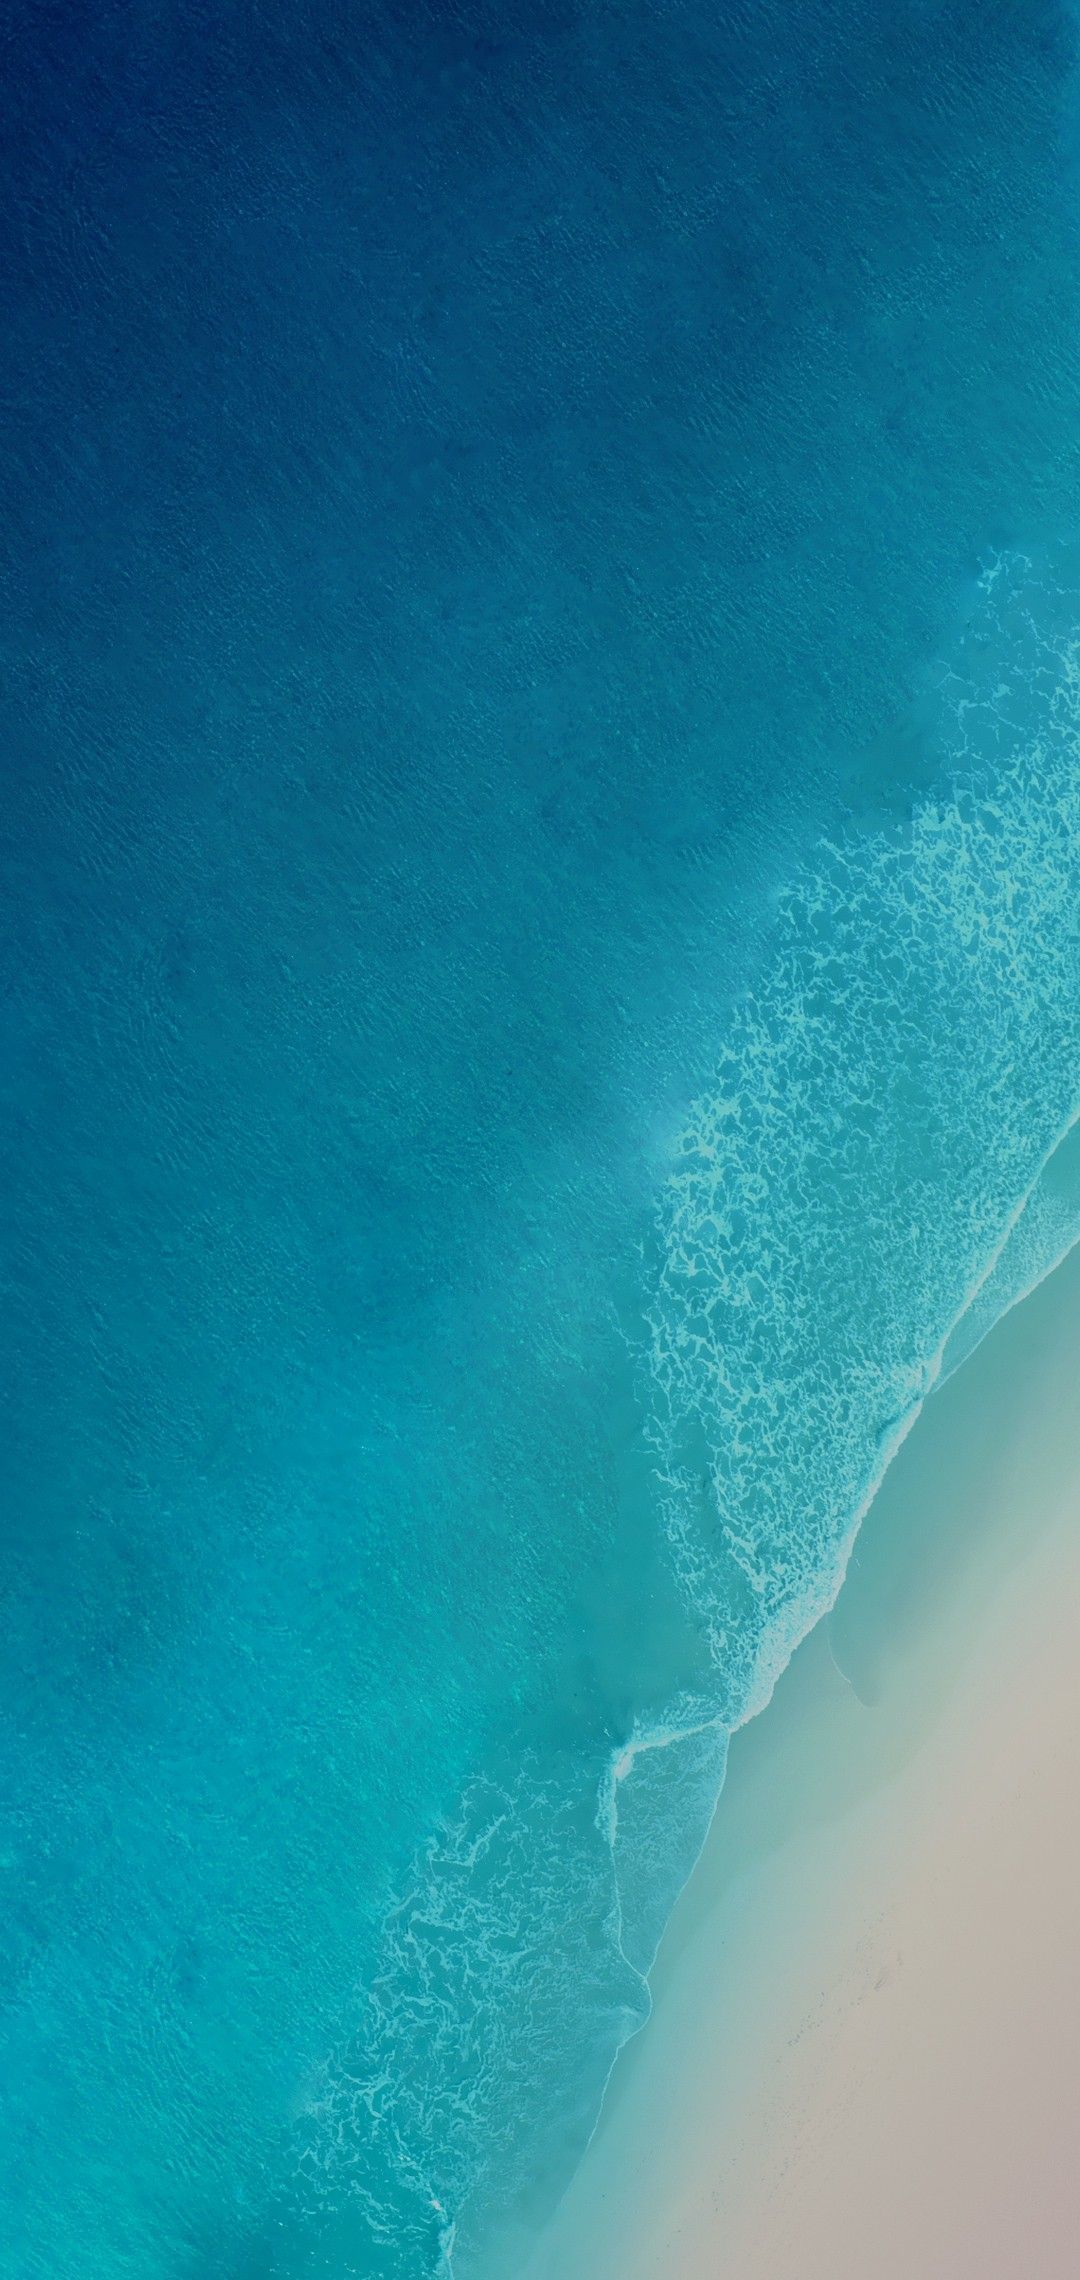 iOS iPhone X, Aqua, blue, Water, ocean, apple, wallpaper, iphone clean, beauty, colour, iOS,. iPhone wallpaper water, Ocean wallpaper, Aqua wallpaper